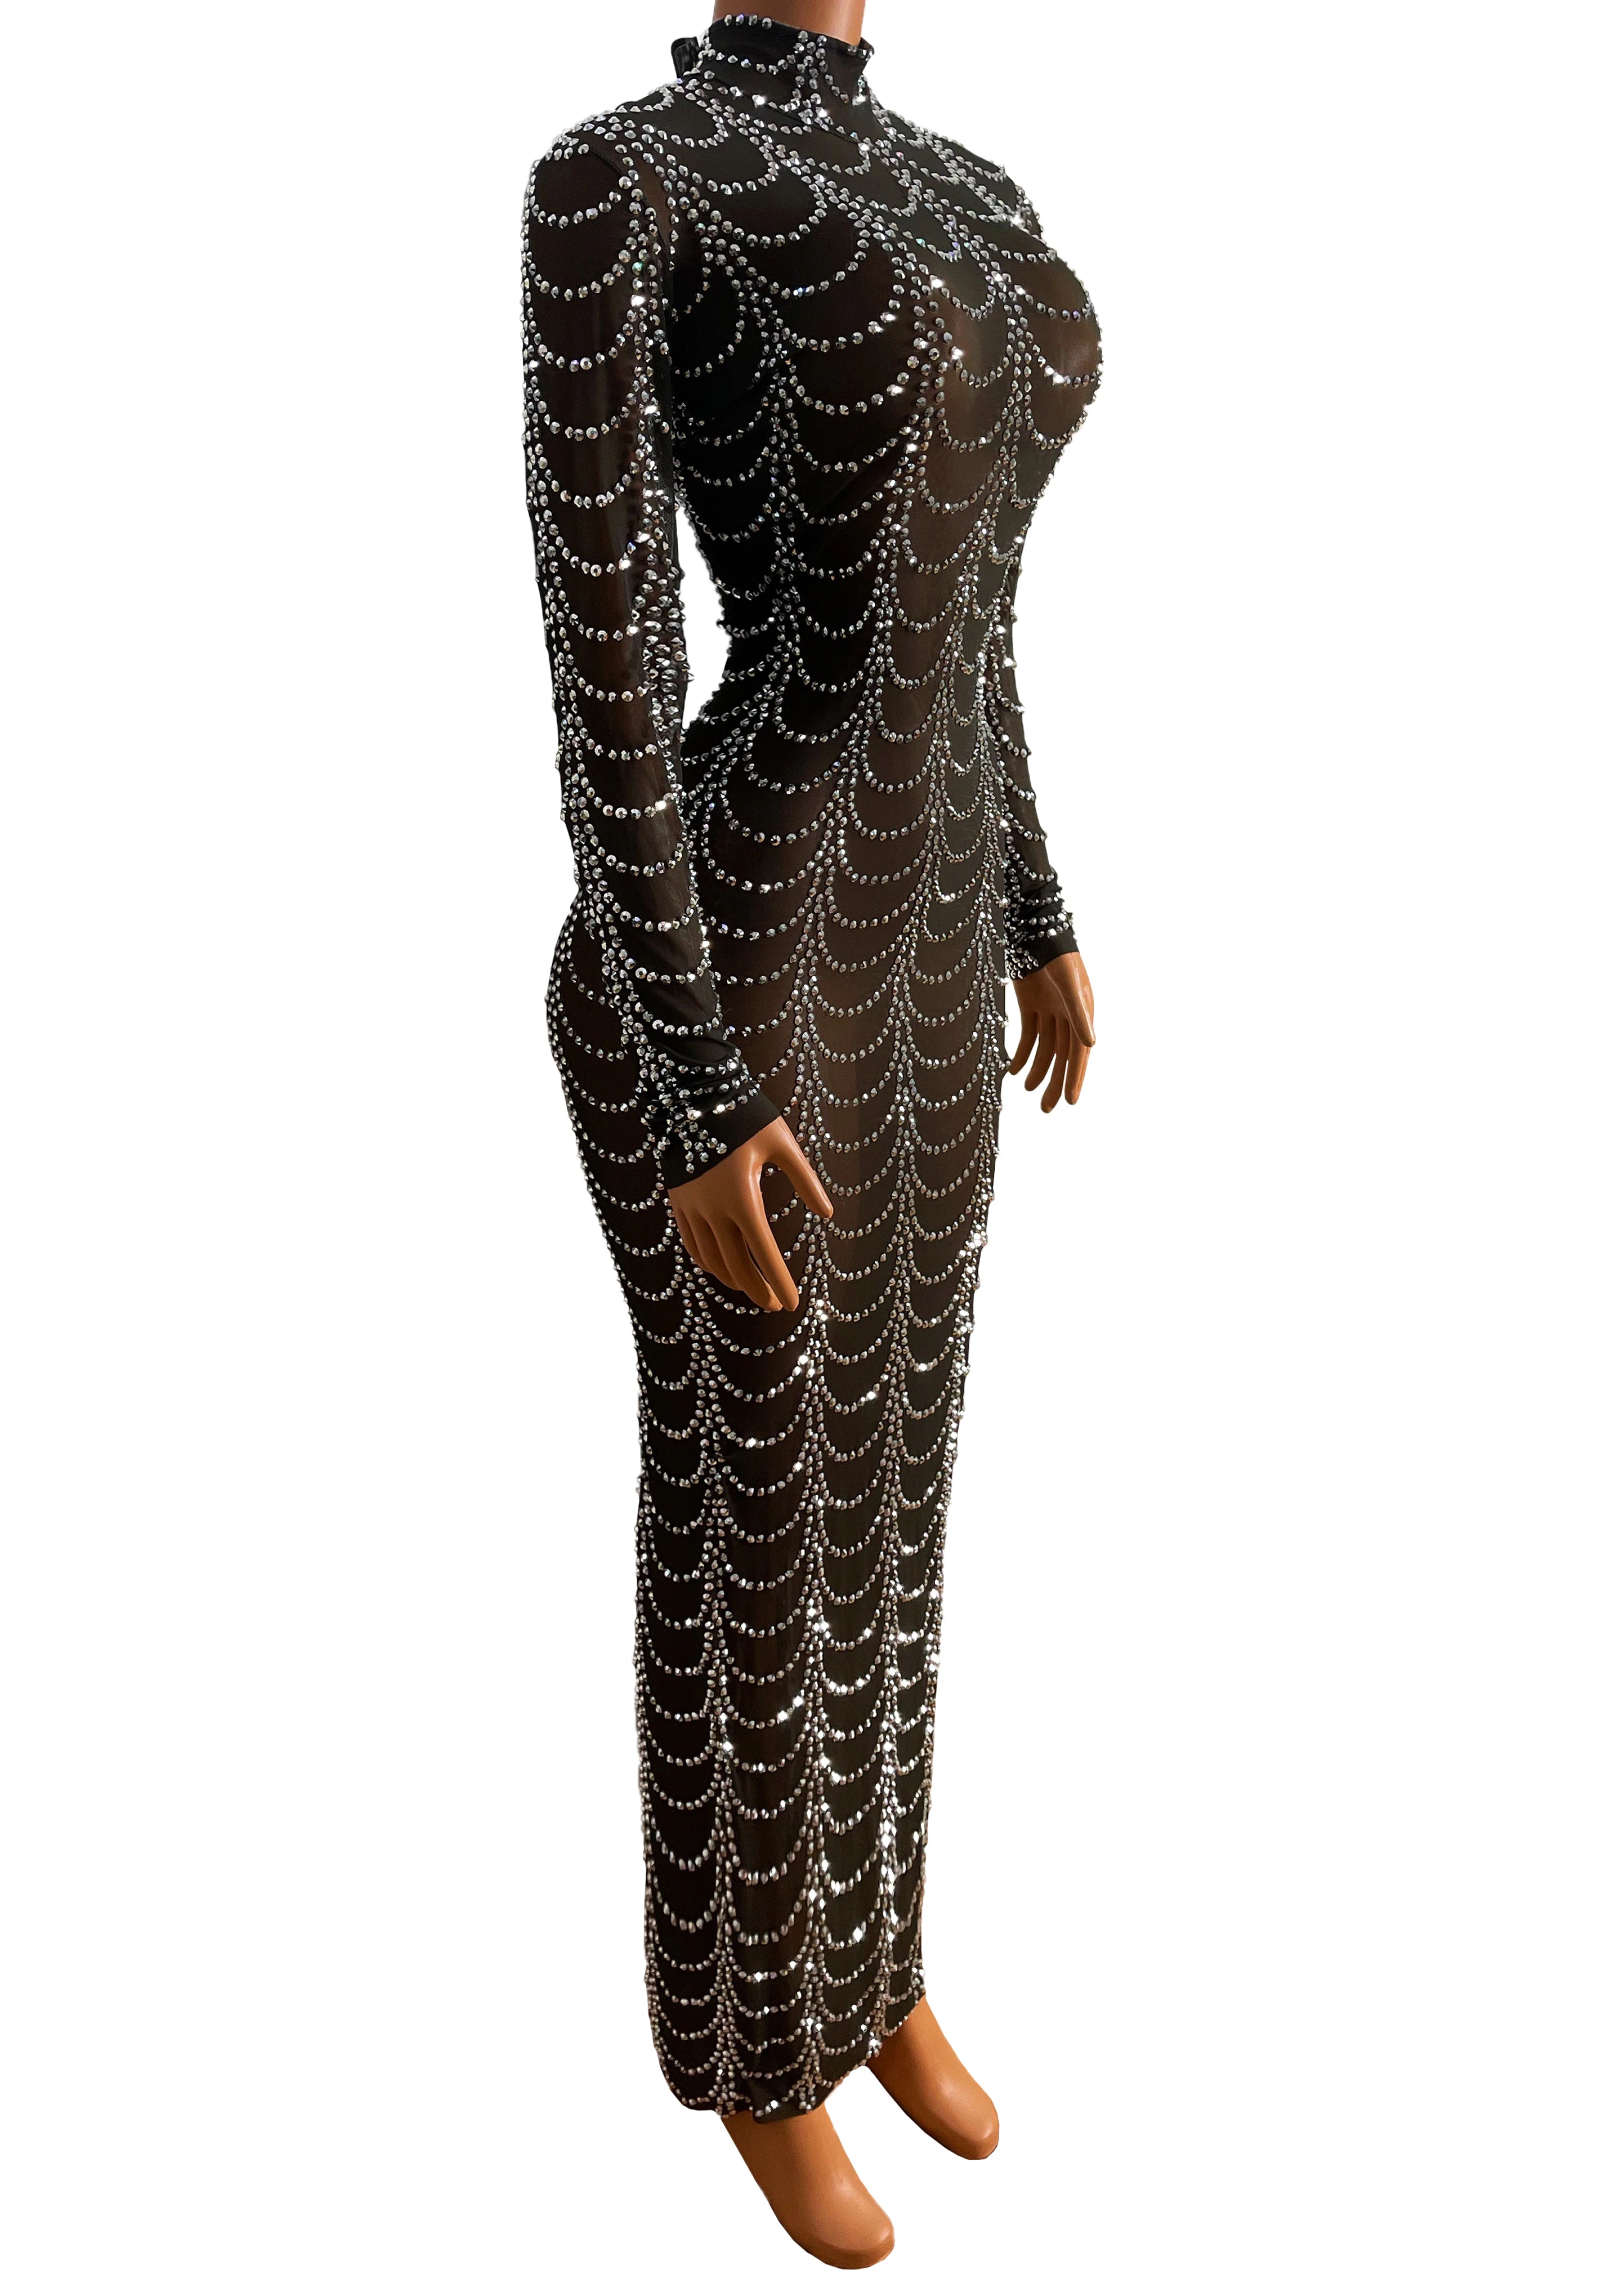 Black Dress with Rhinestones, Gemstones Dresses (Medium to XL)